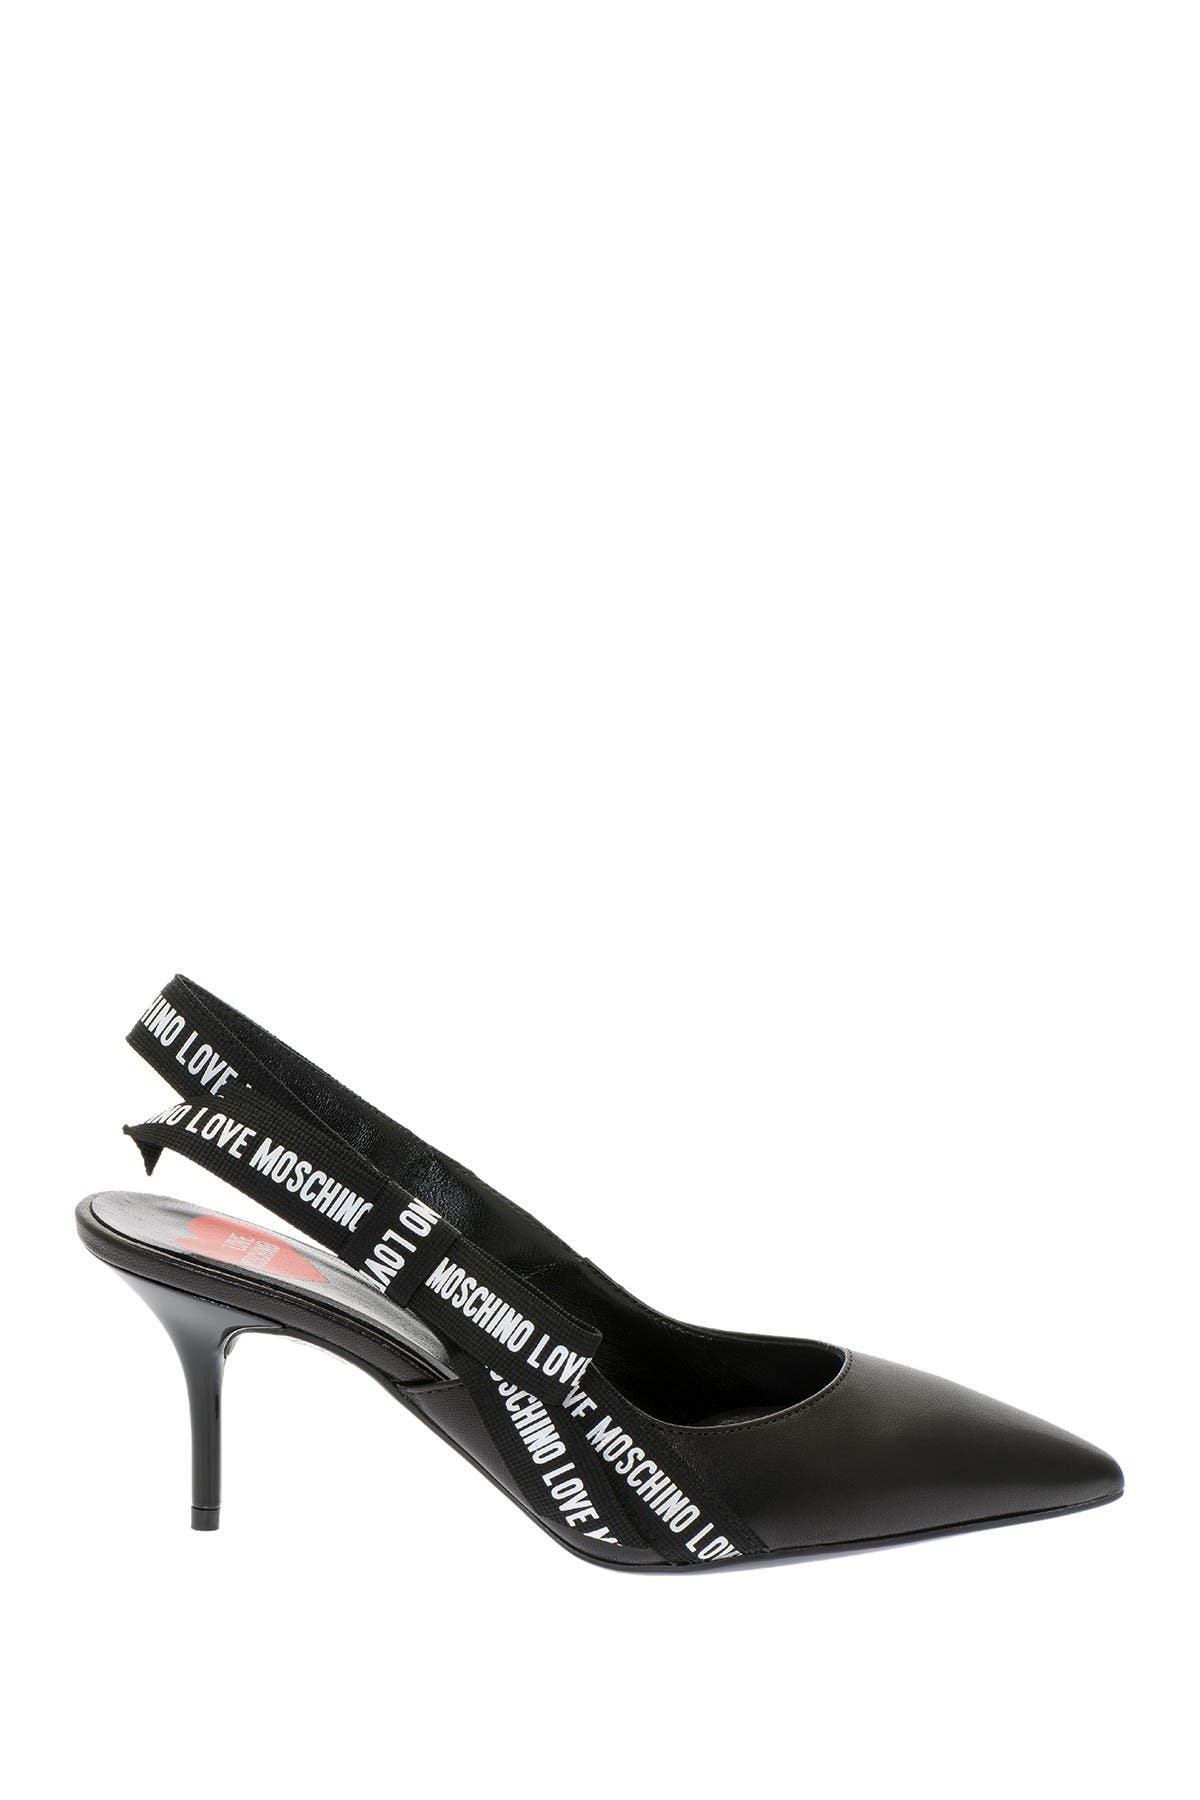 Love Moschino Pointed Toe Slingback Kitten Heel In Black | ModeSens